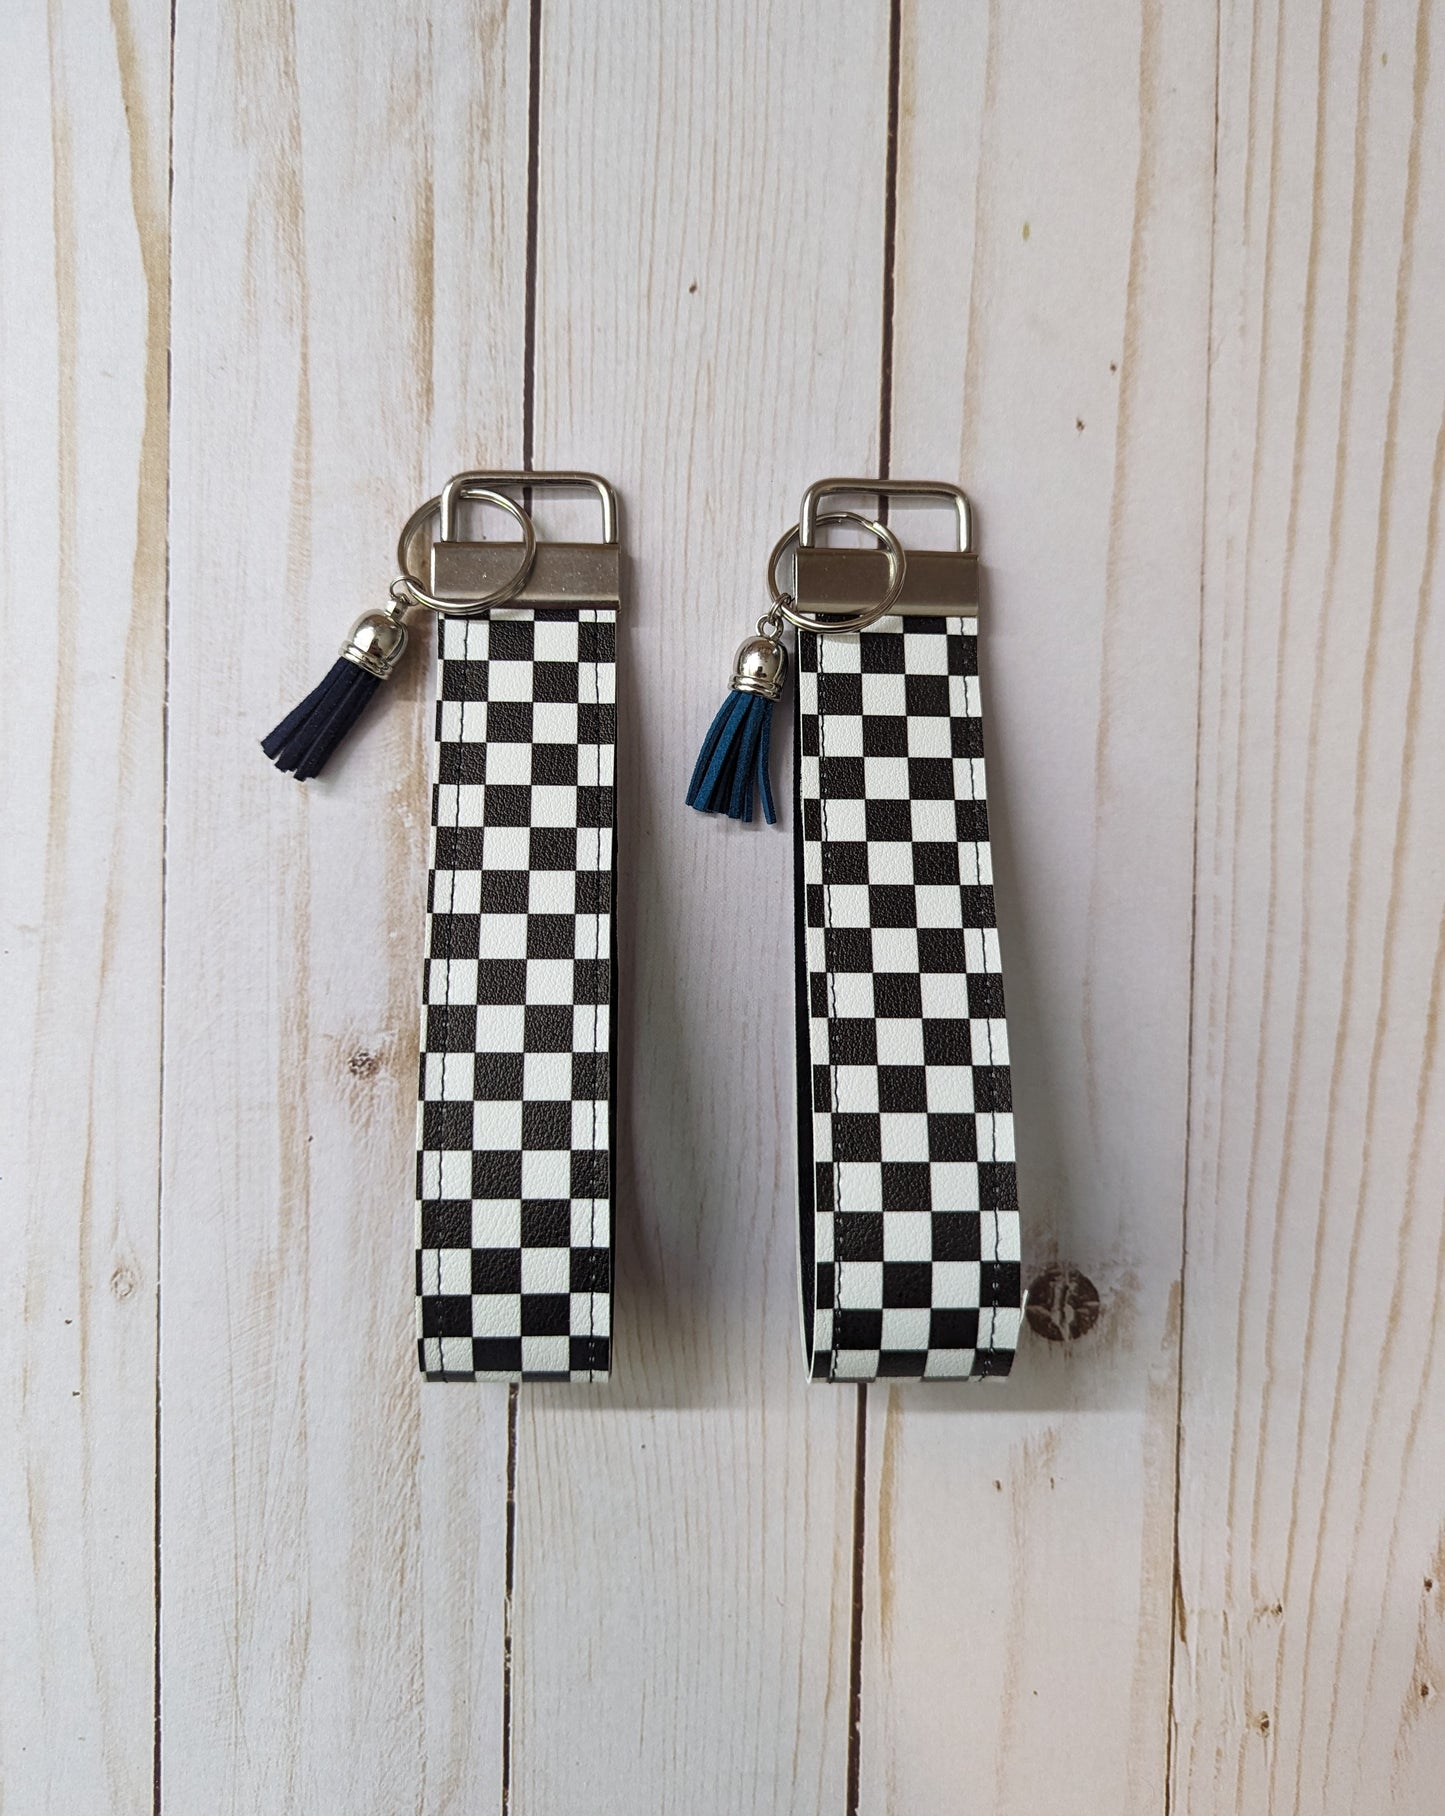 Wristlet Key Fob - Faux Leather Key Fob - Black and White Checkered